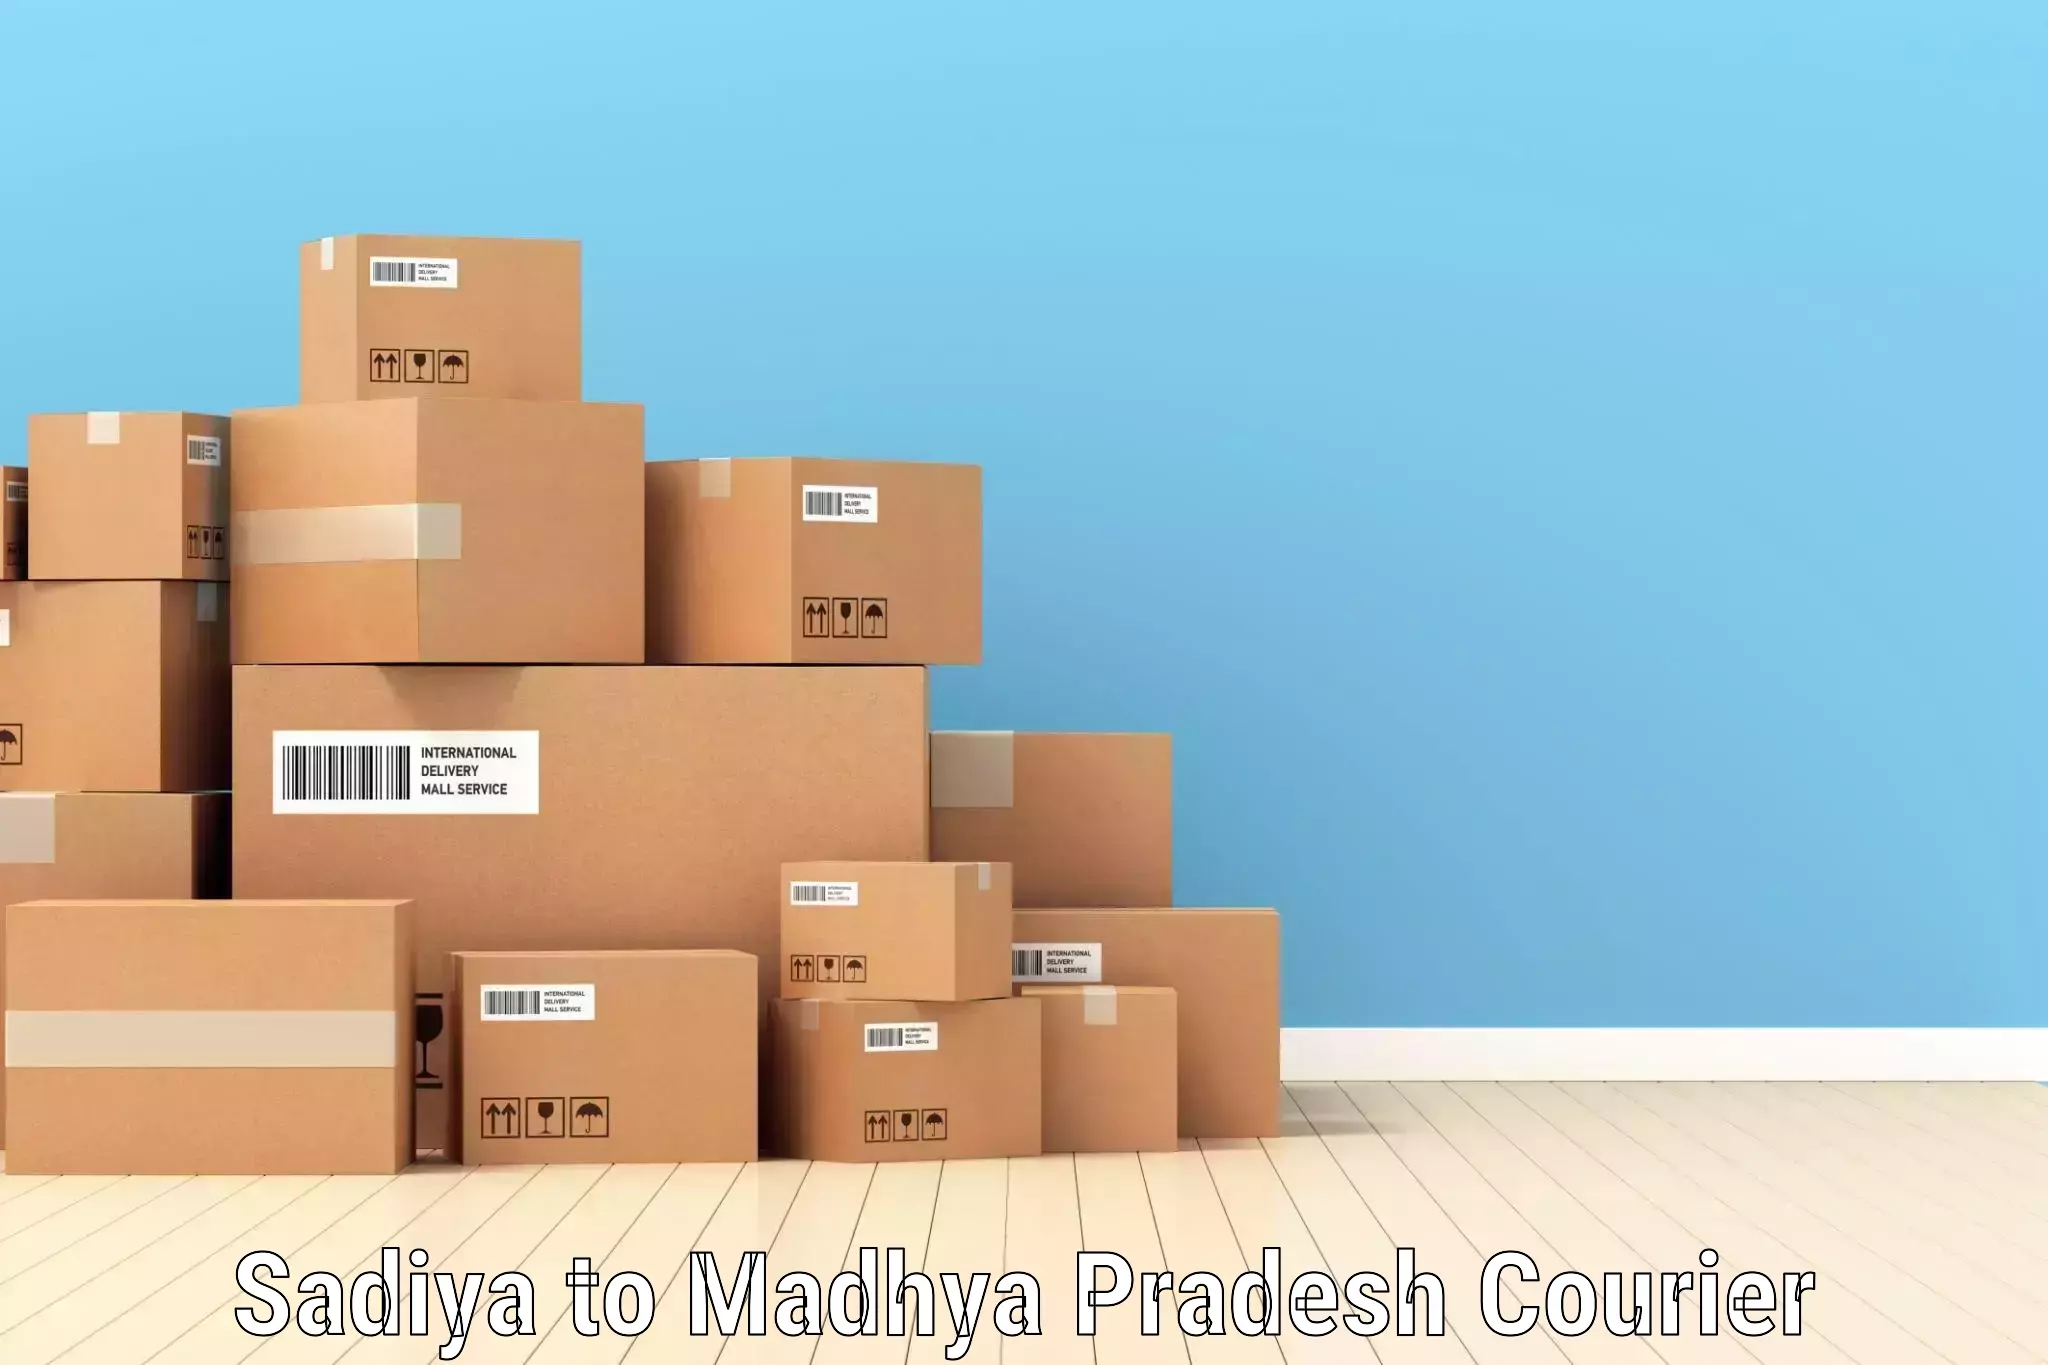 Full-service courier options Sadiya to Madhya Pradesh